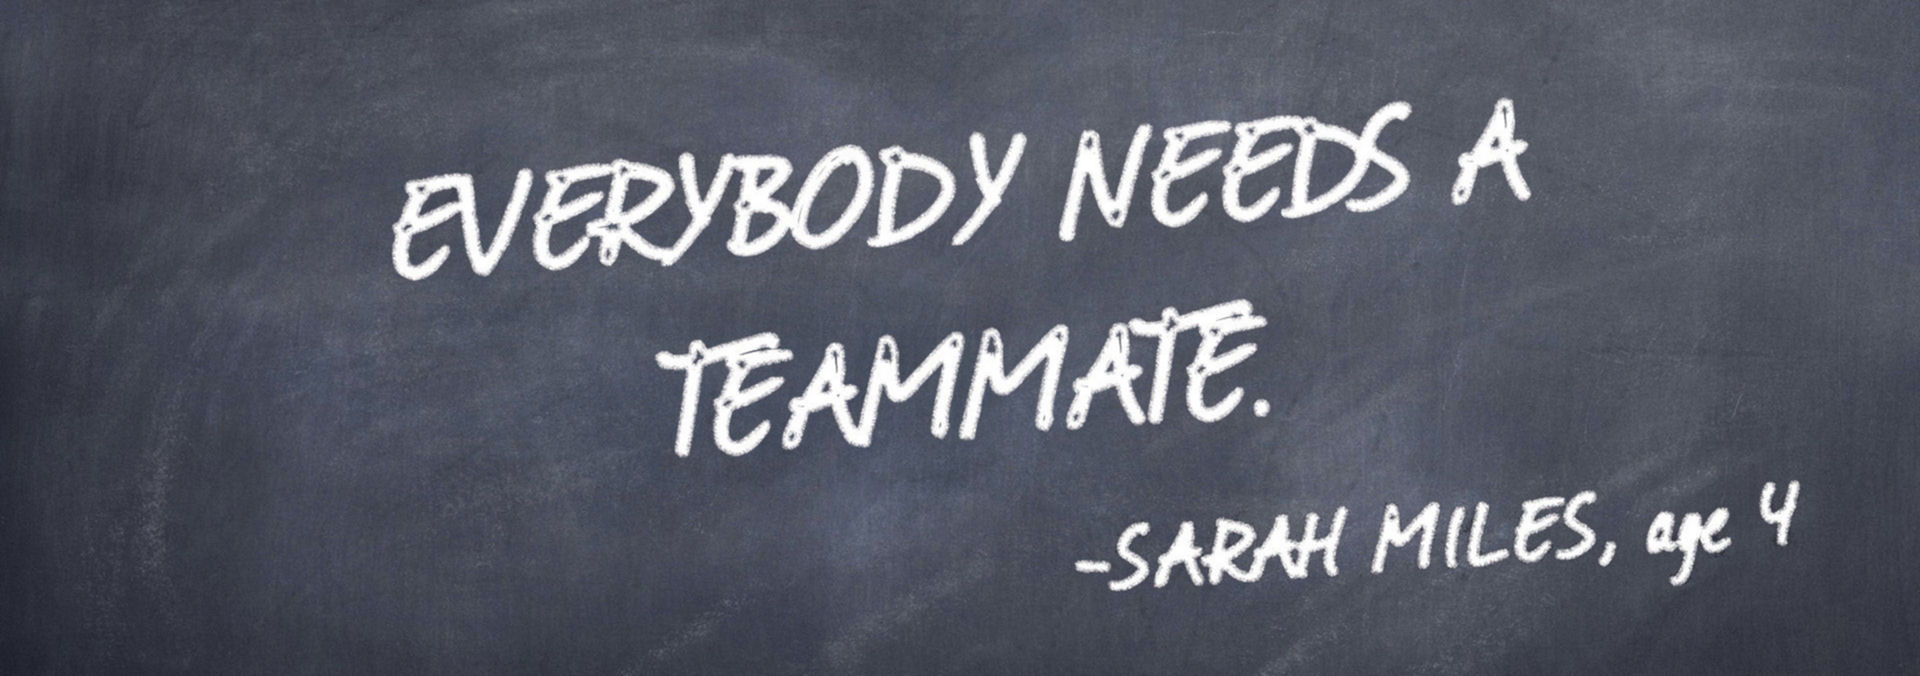 Everybody Needs A Teammate